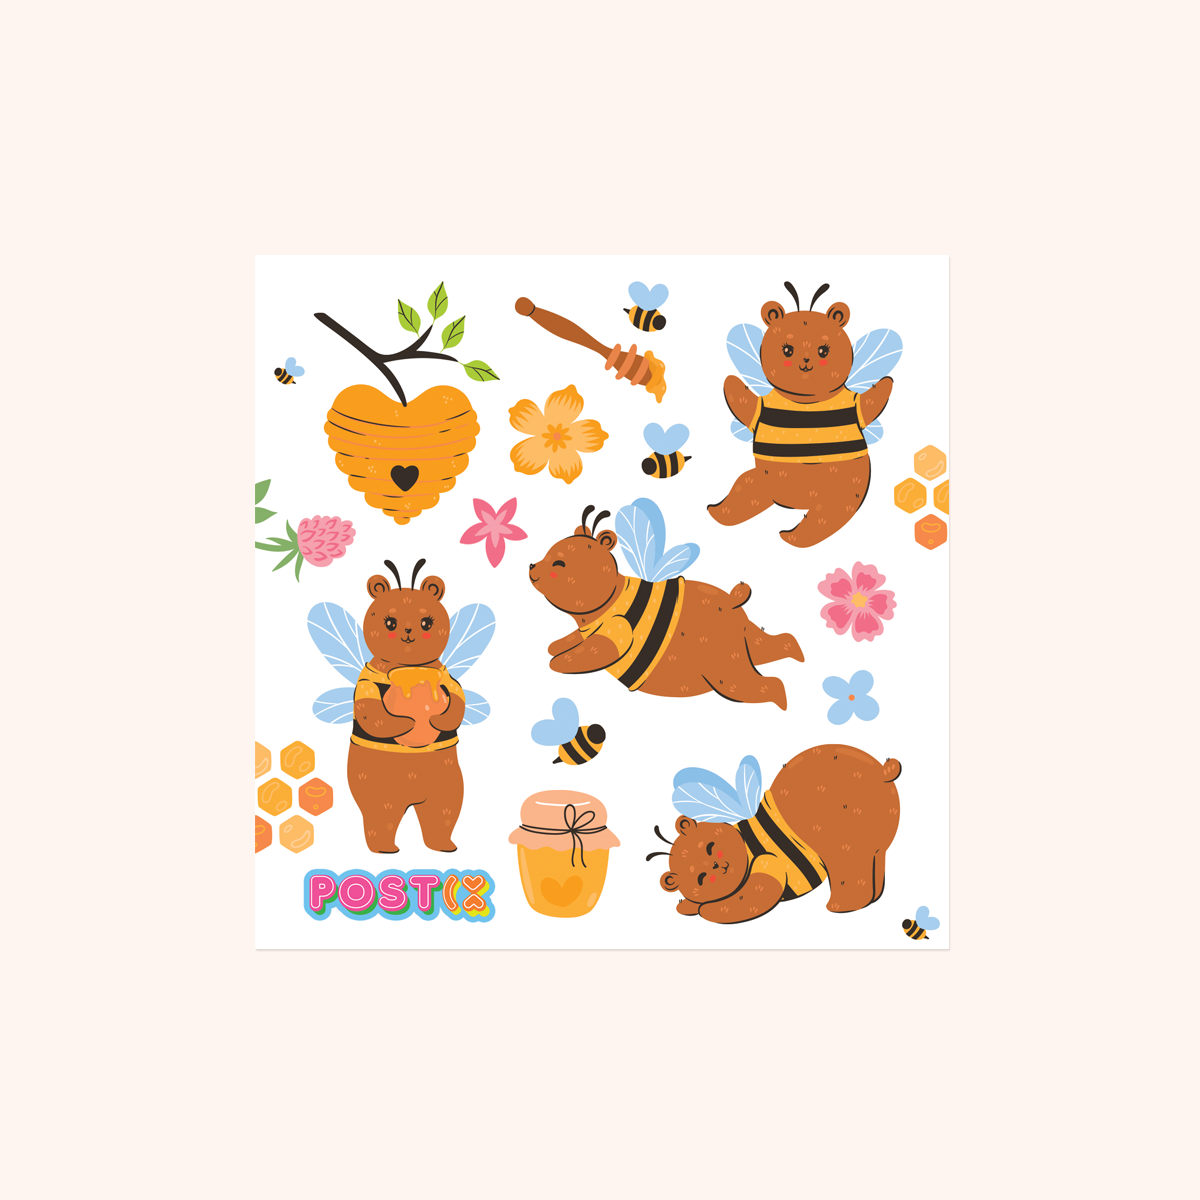 The Honeybear Square Sticker Sheet